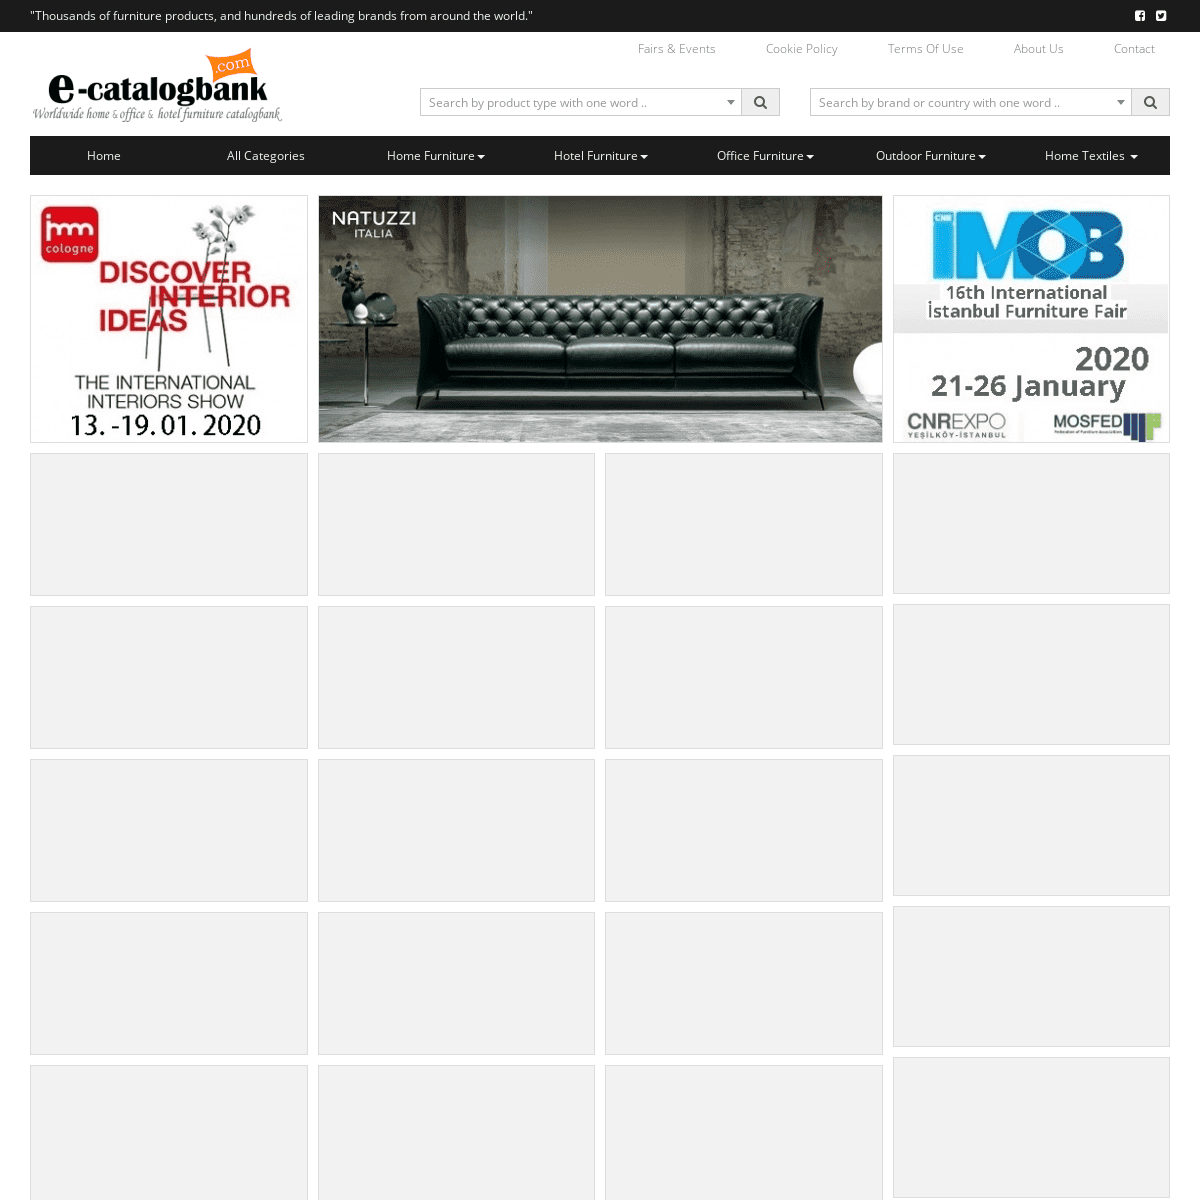 A complete backup of e-catalogbank.com